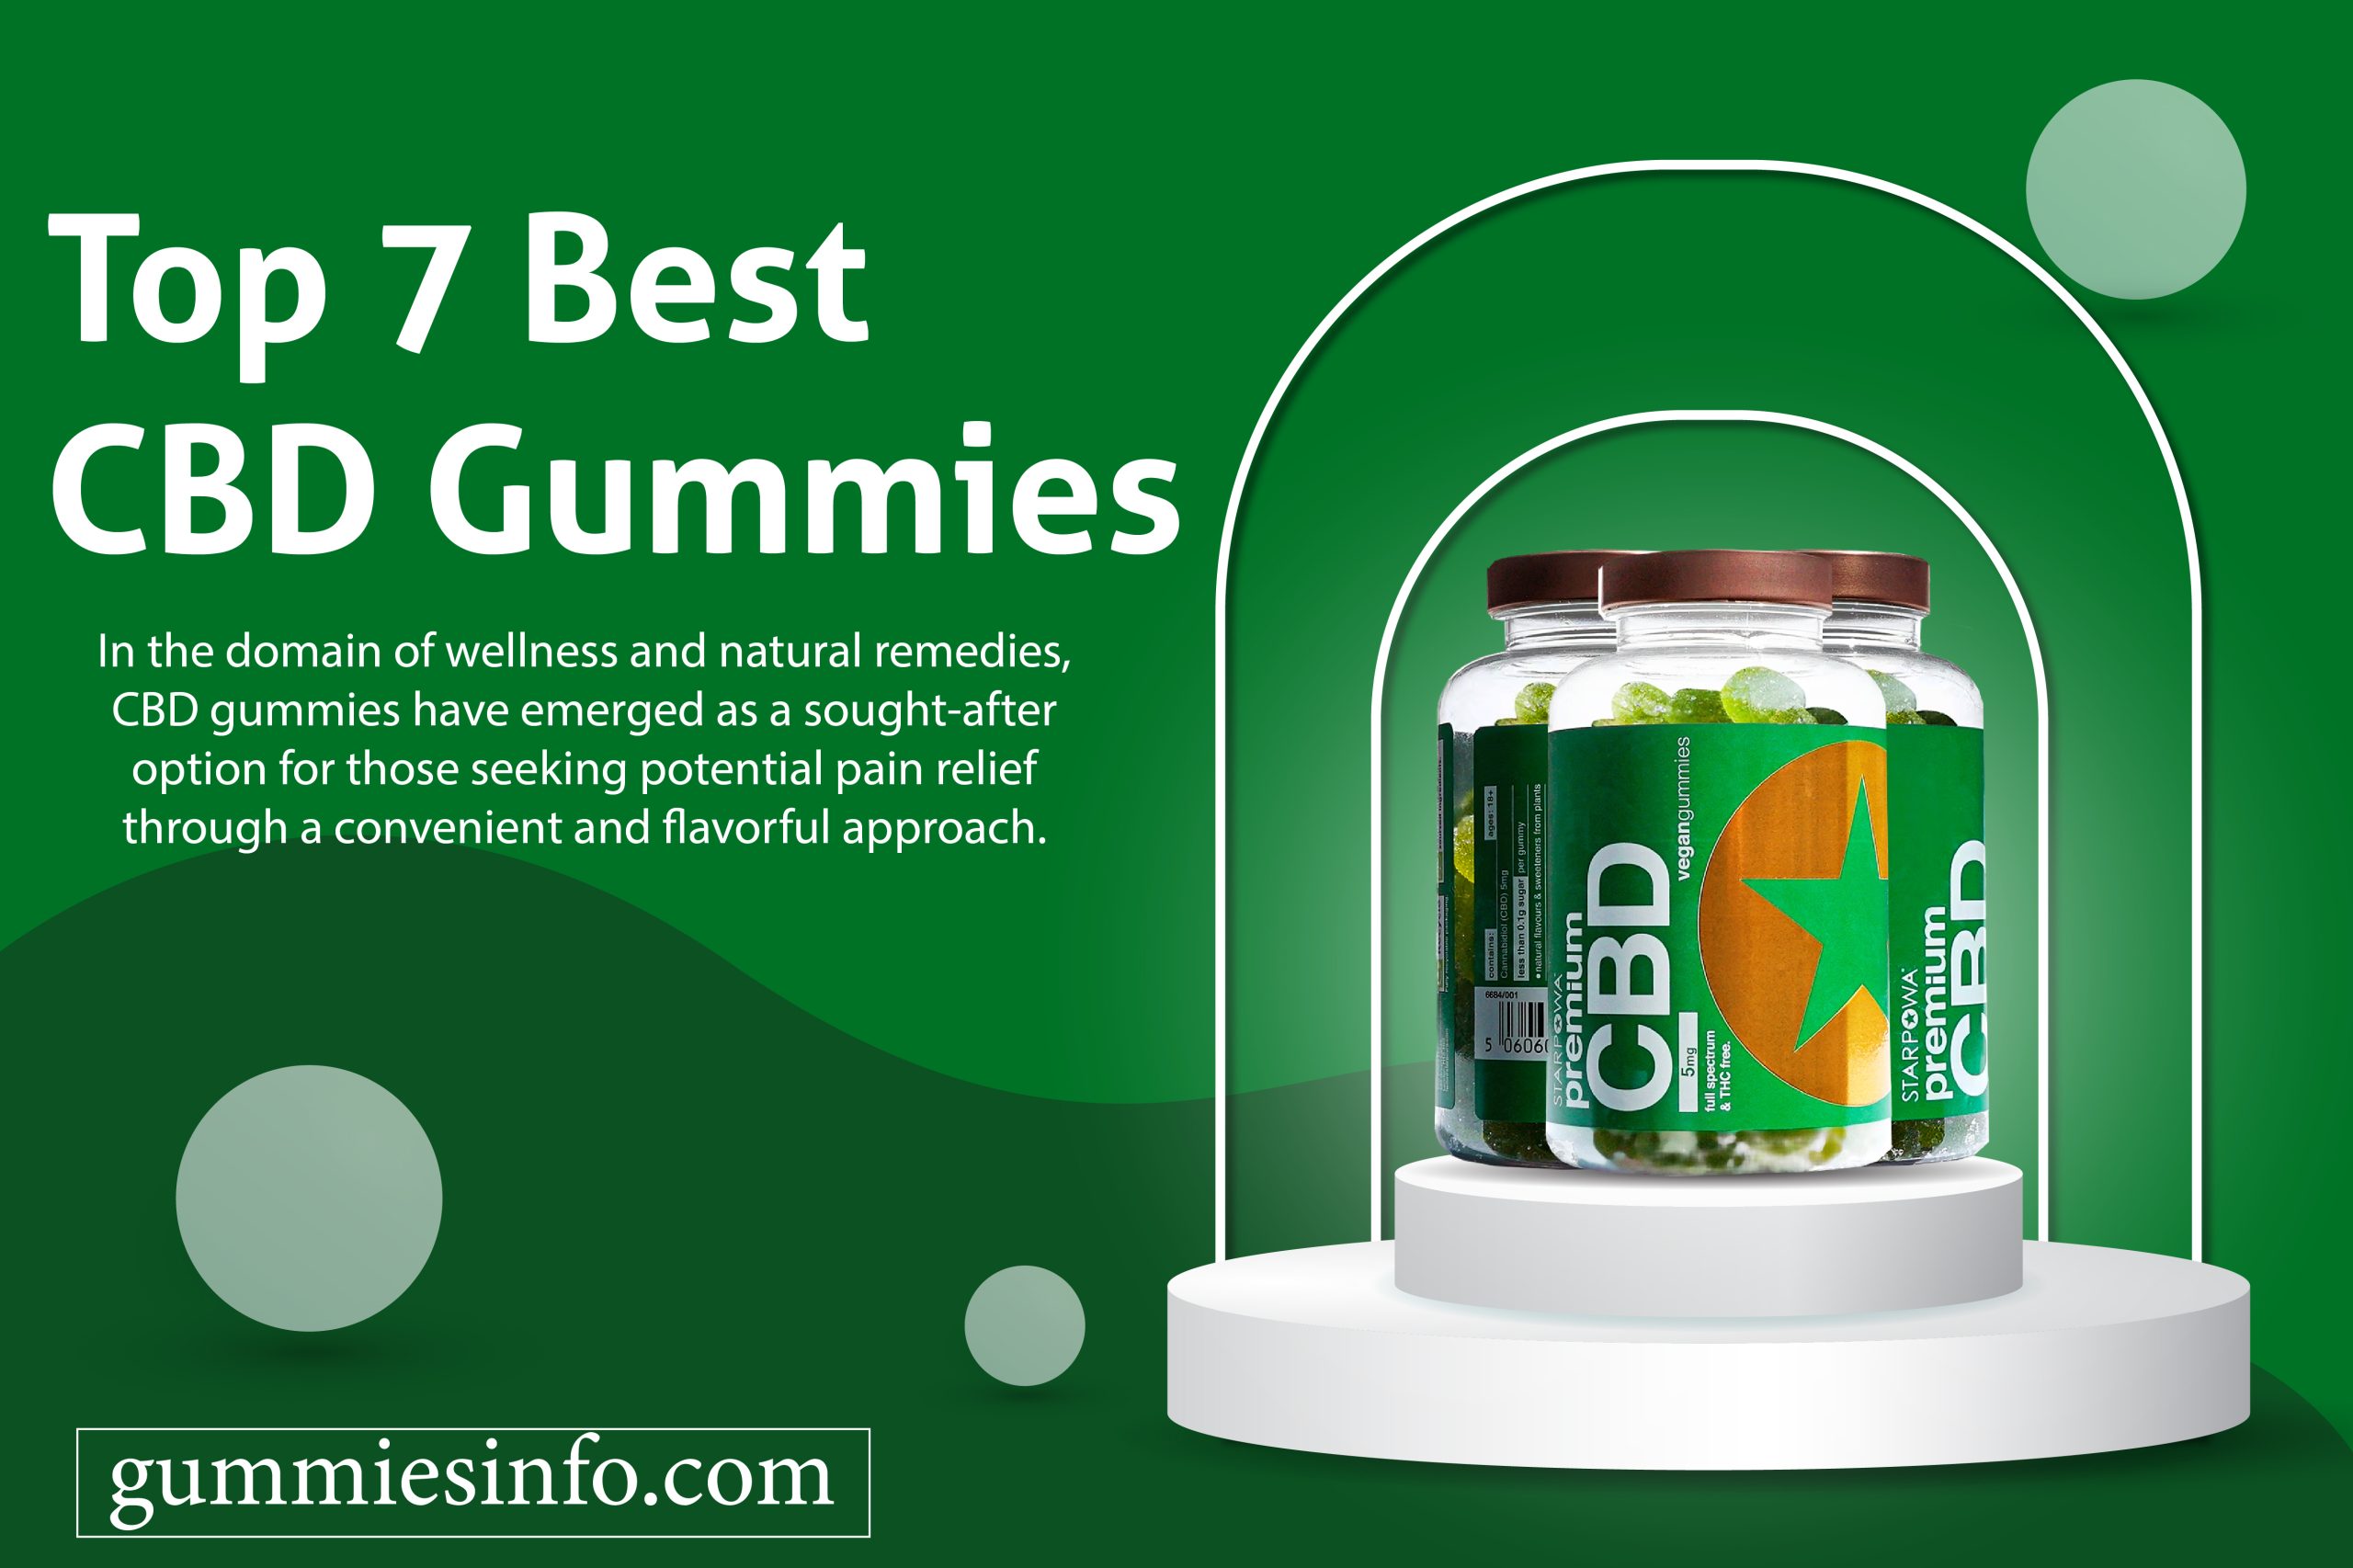 Top 7 Best CBD Gummies